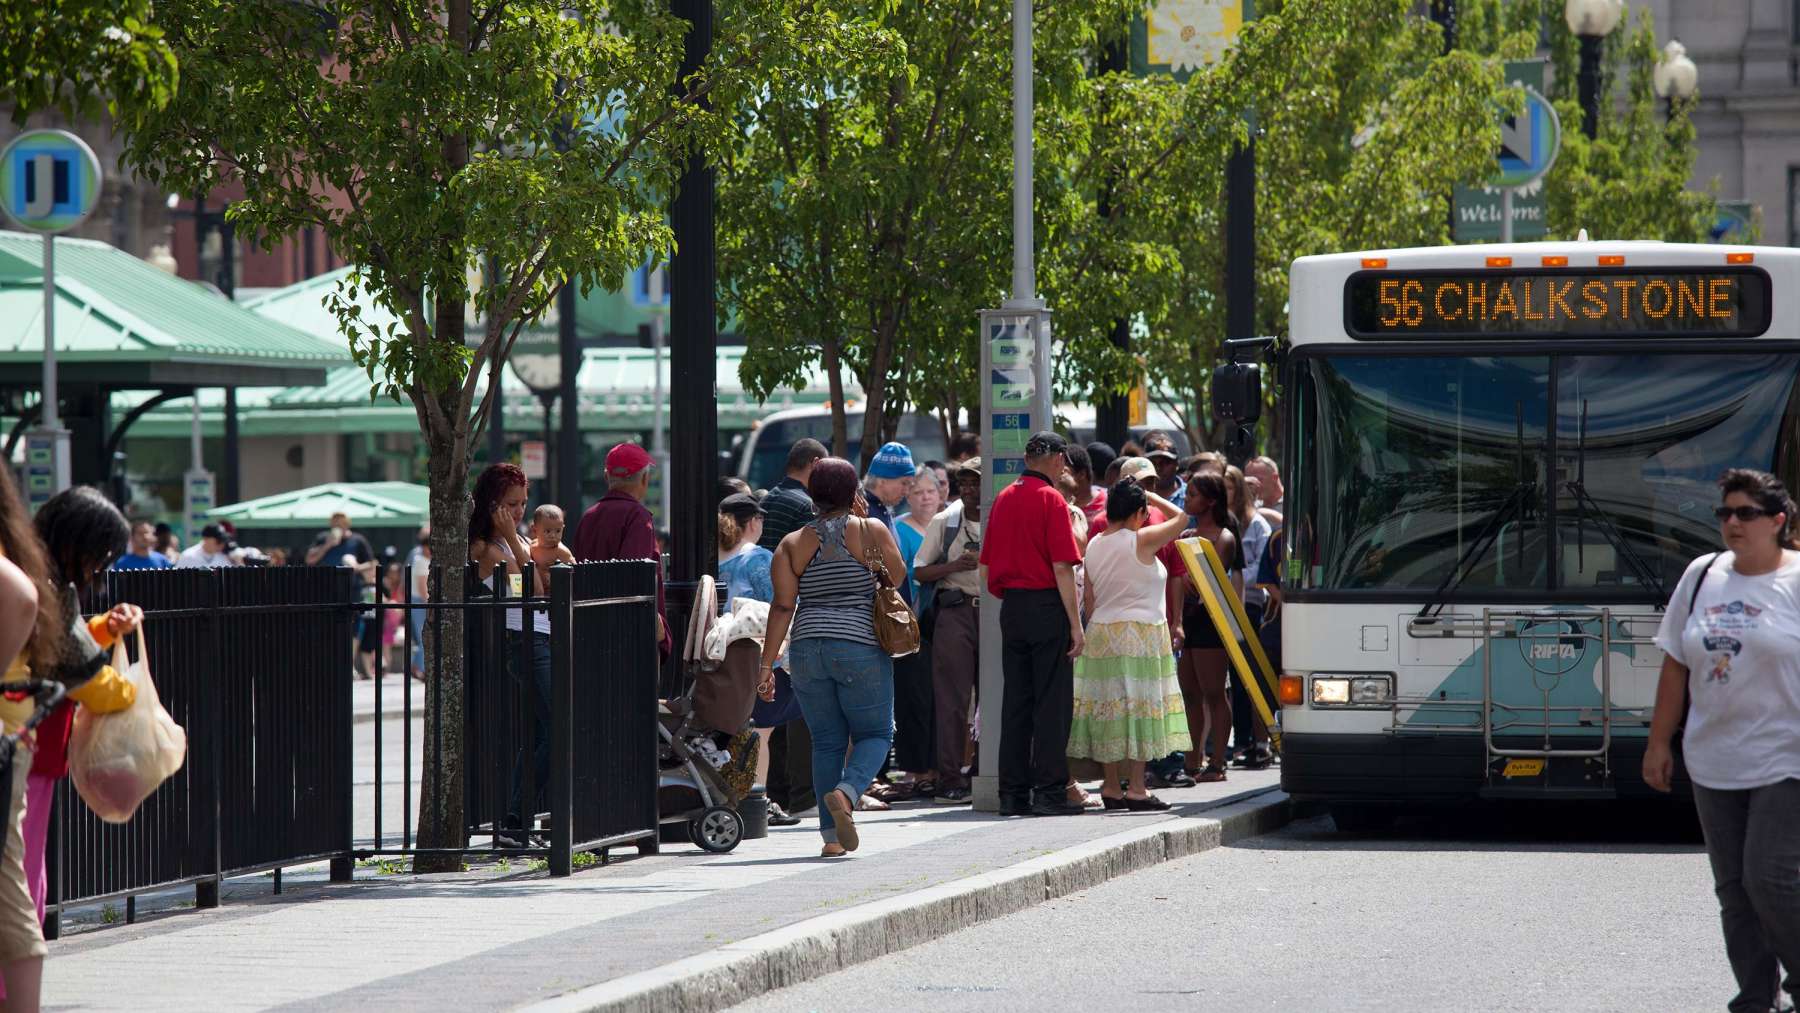 Rhode Island News: Raimondo’s multi-hub bus plan violates principles in the Transit Master Plan her administration just approved